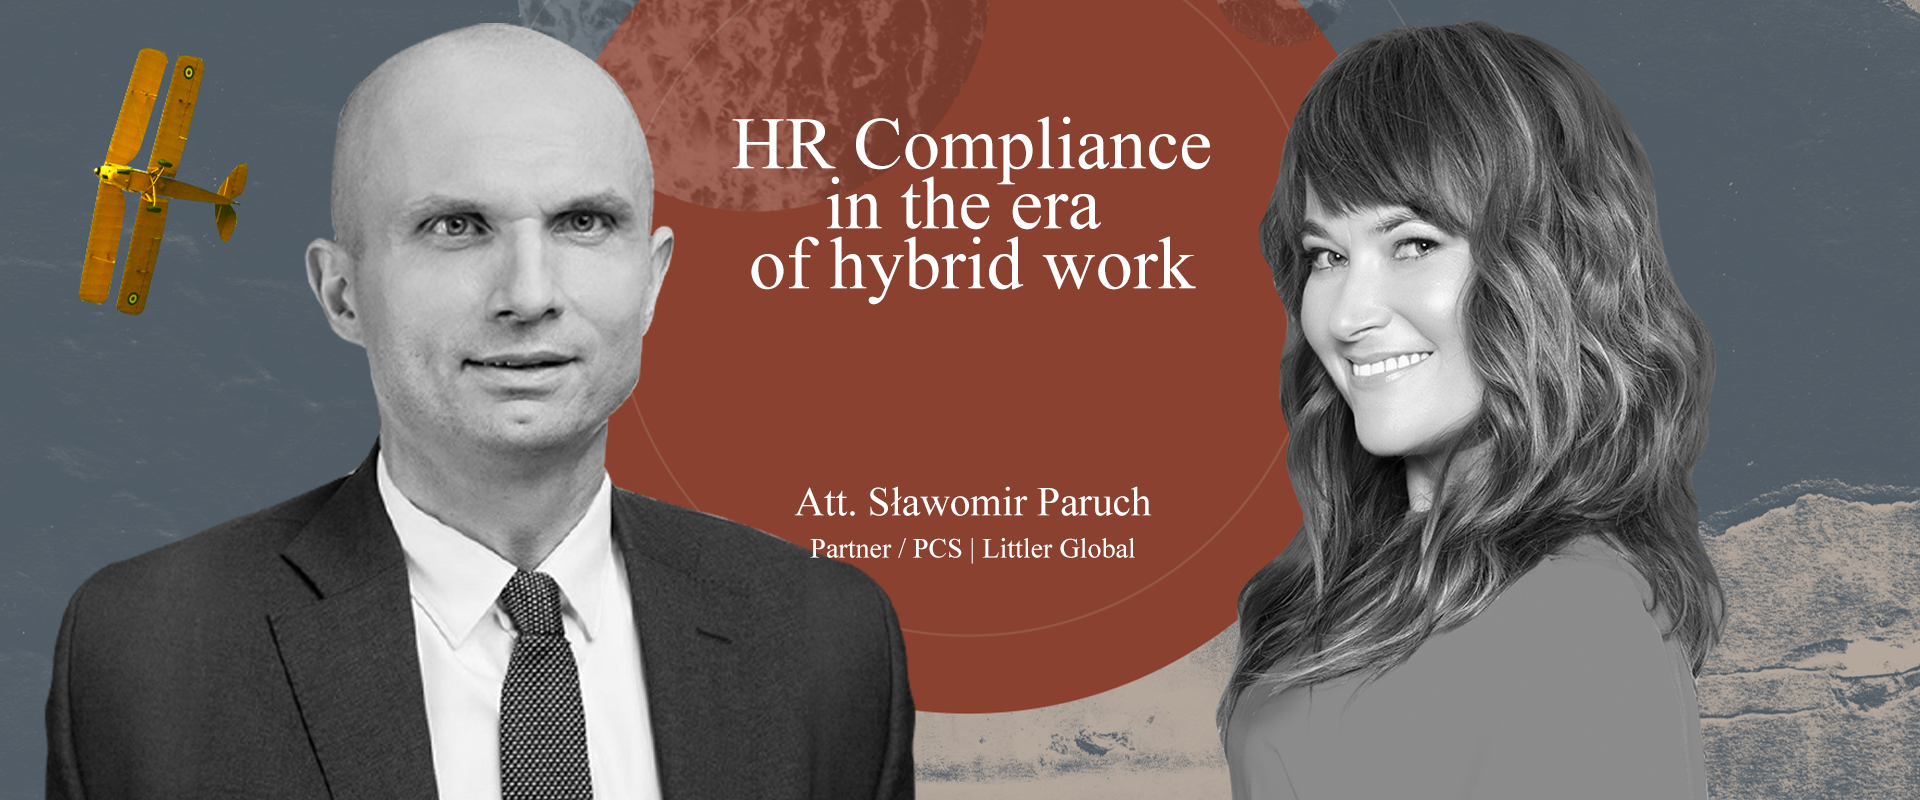 HR Compliance in the era of hybrid work